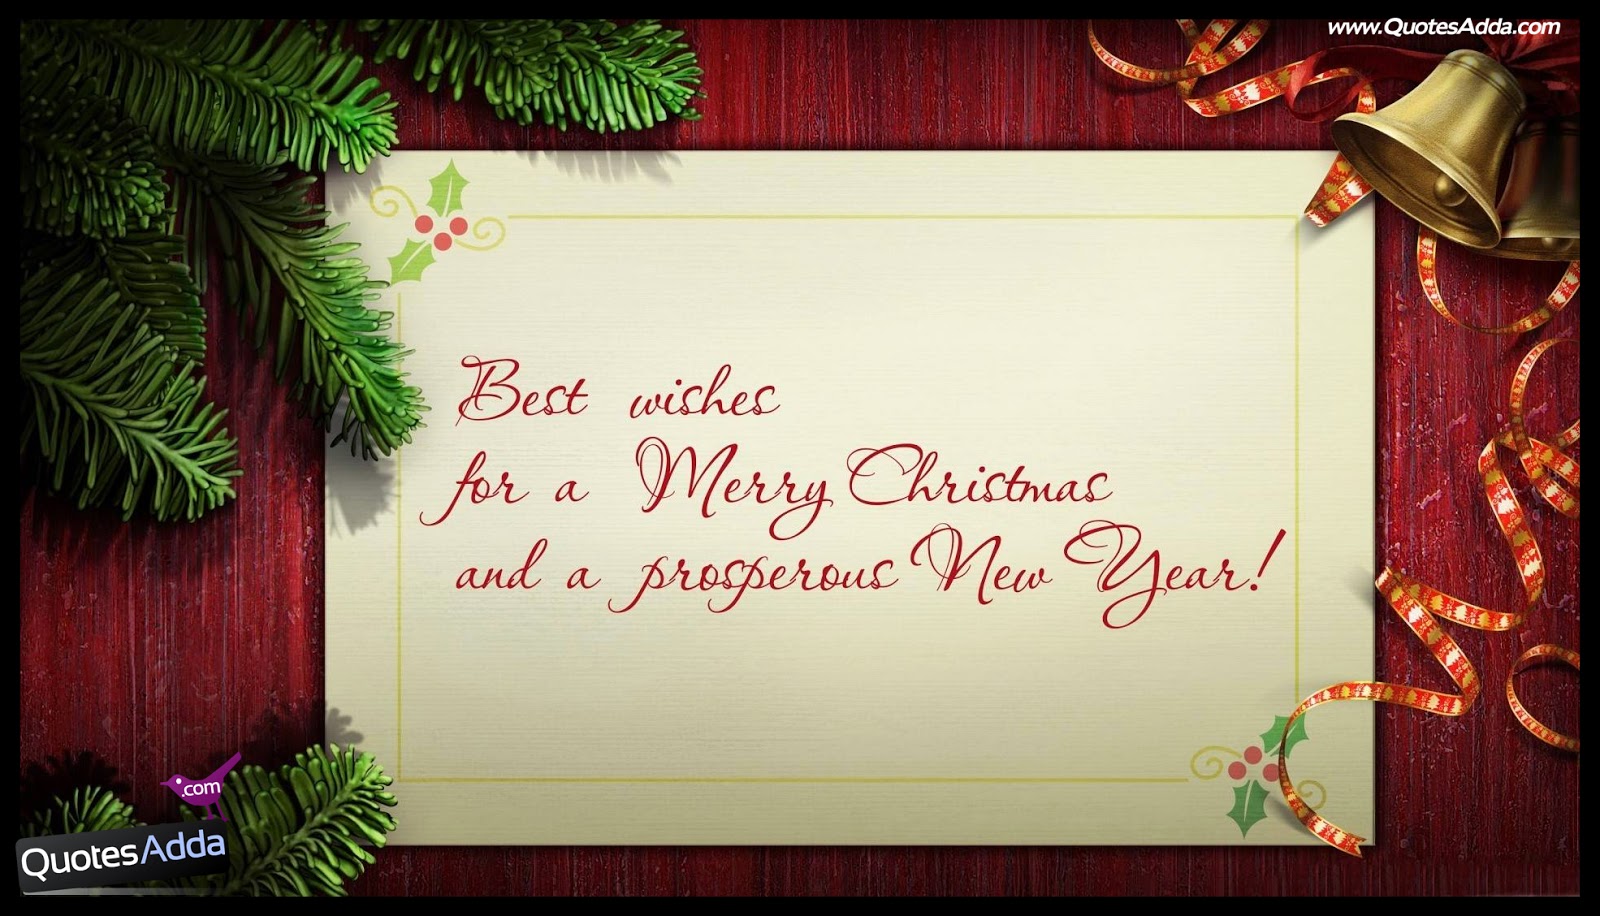 Merry Christmas Greeting Cards in English  QuotesAdda.com 